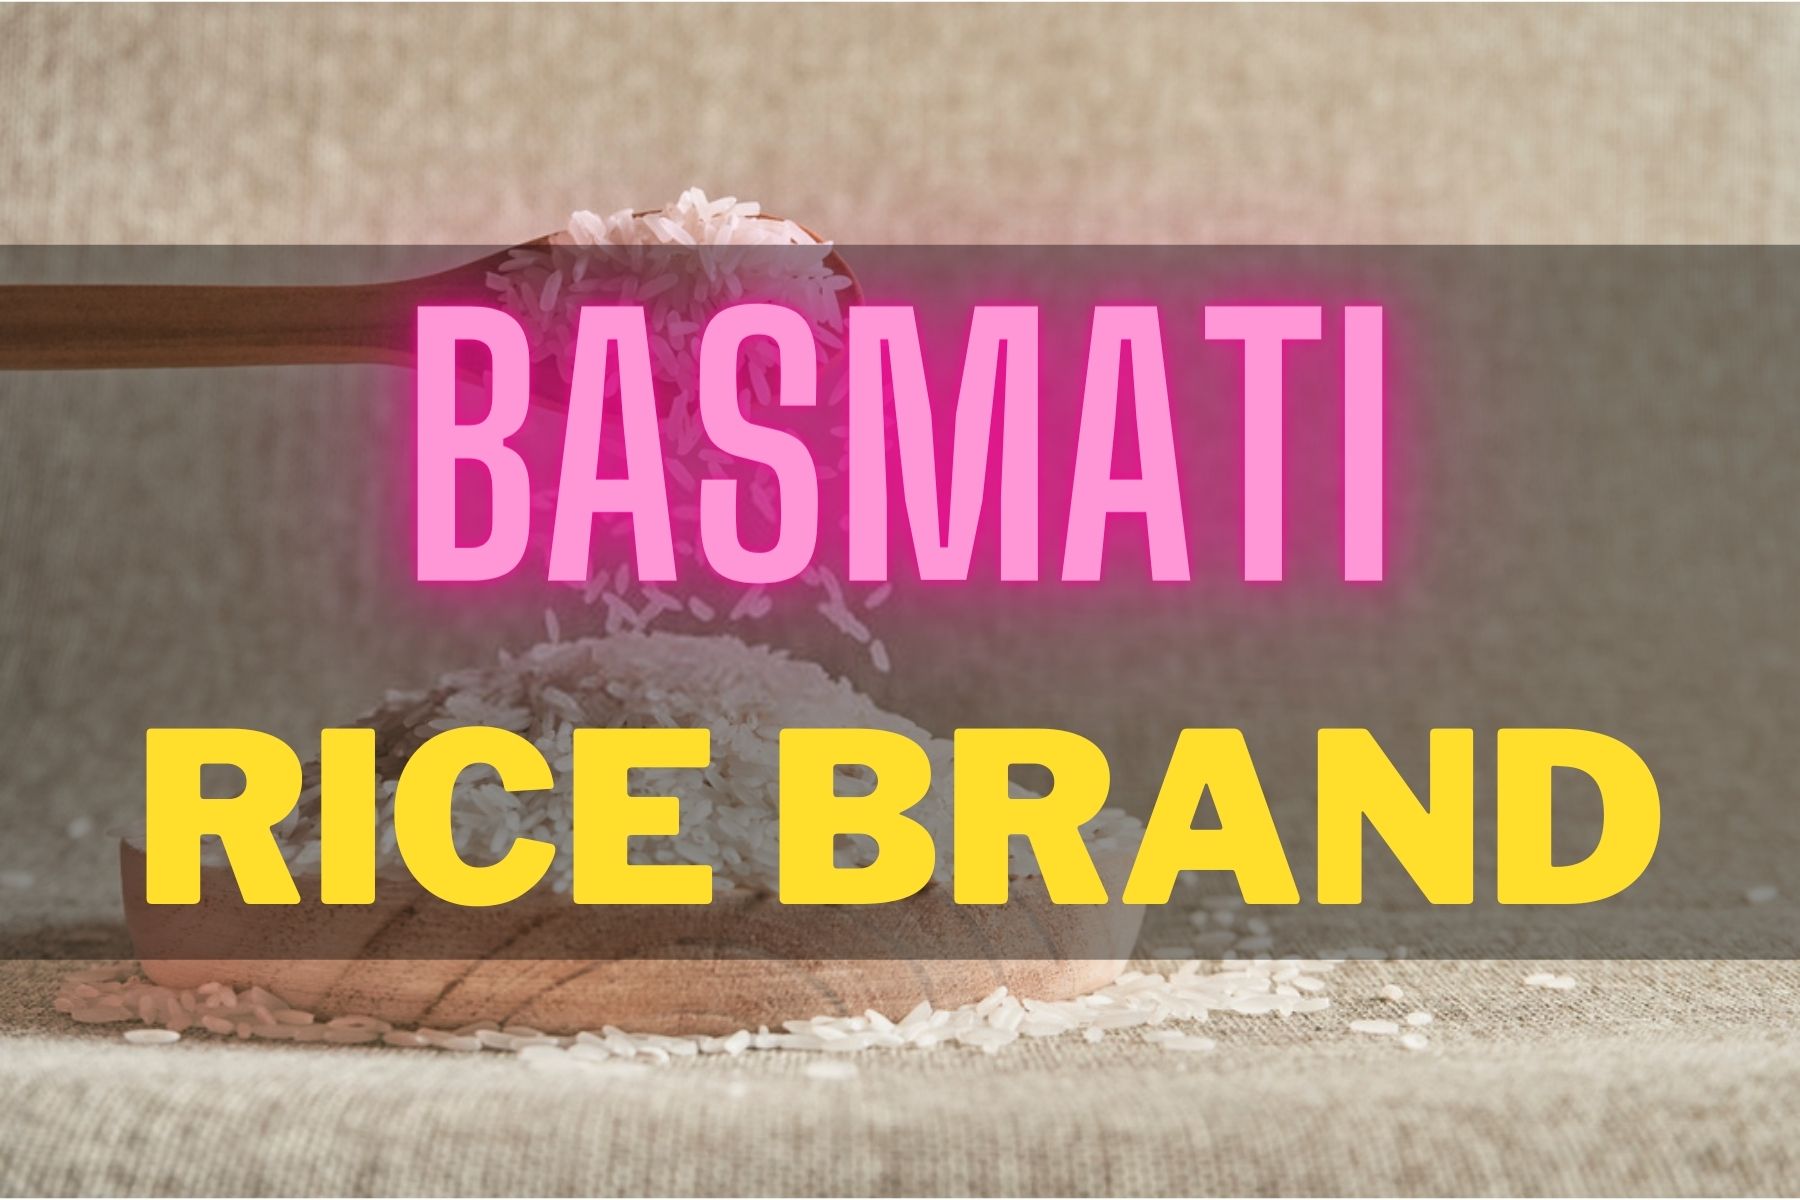 Best basmati rice brand